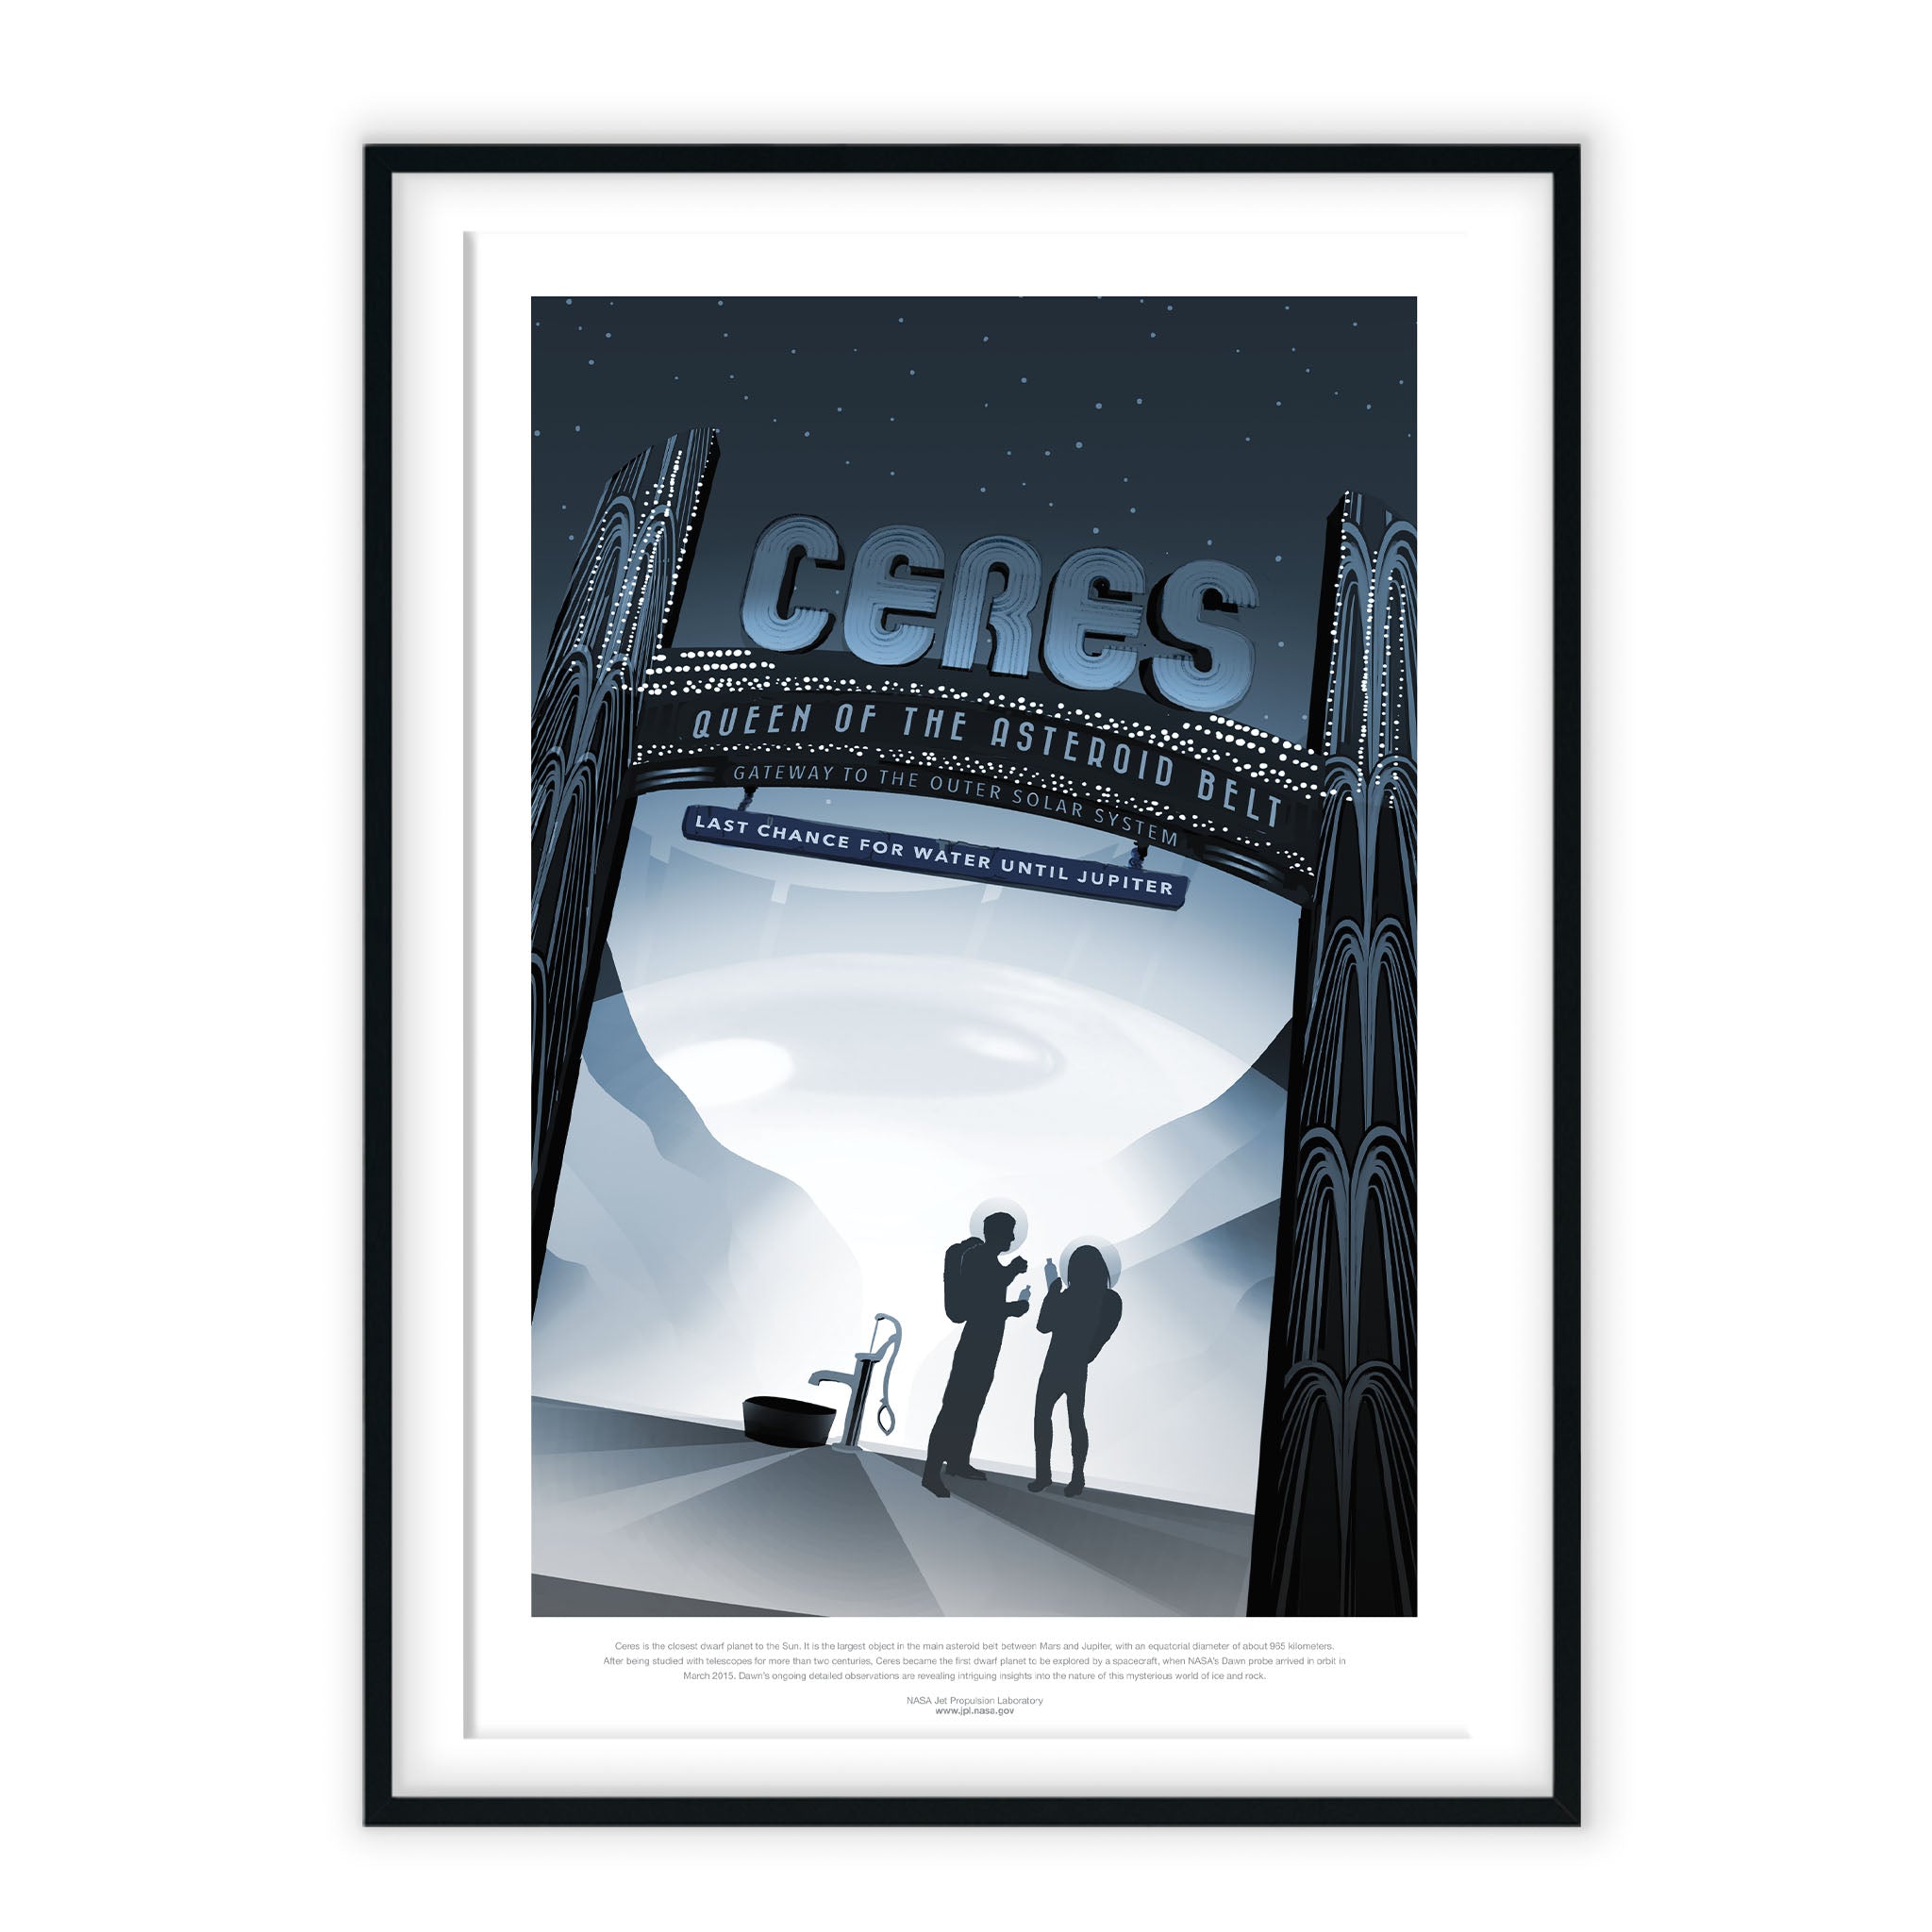 Ceres - Visions of the Future NASA